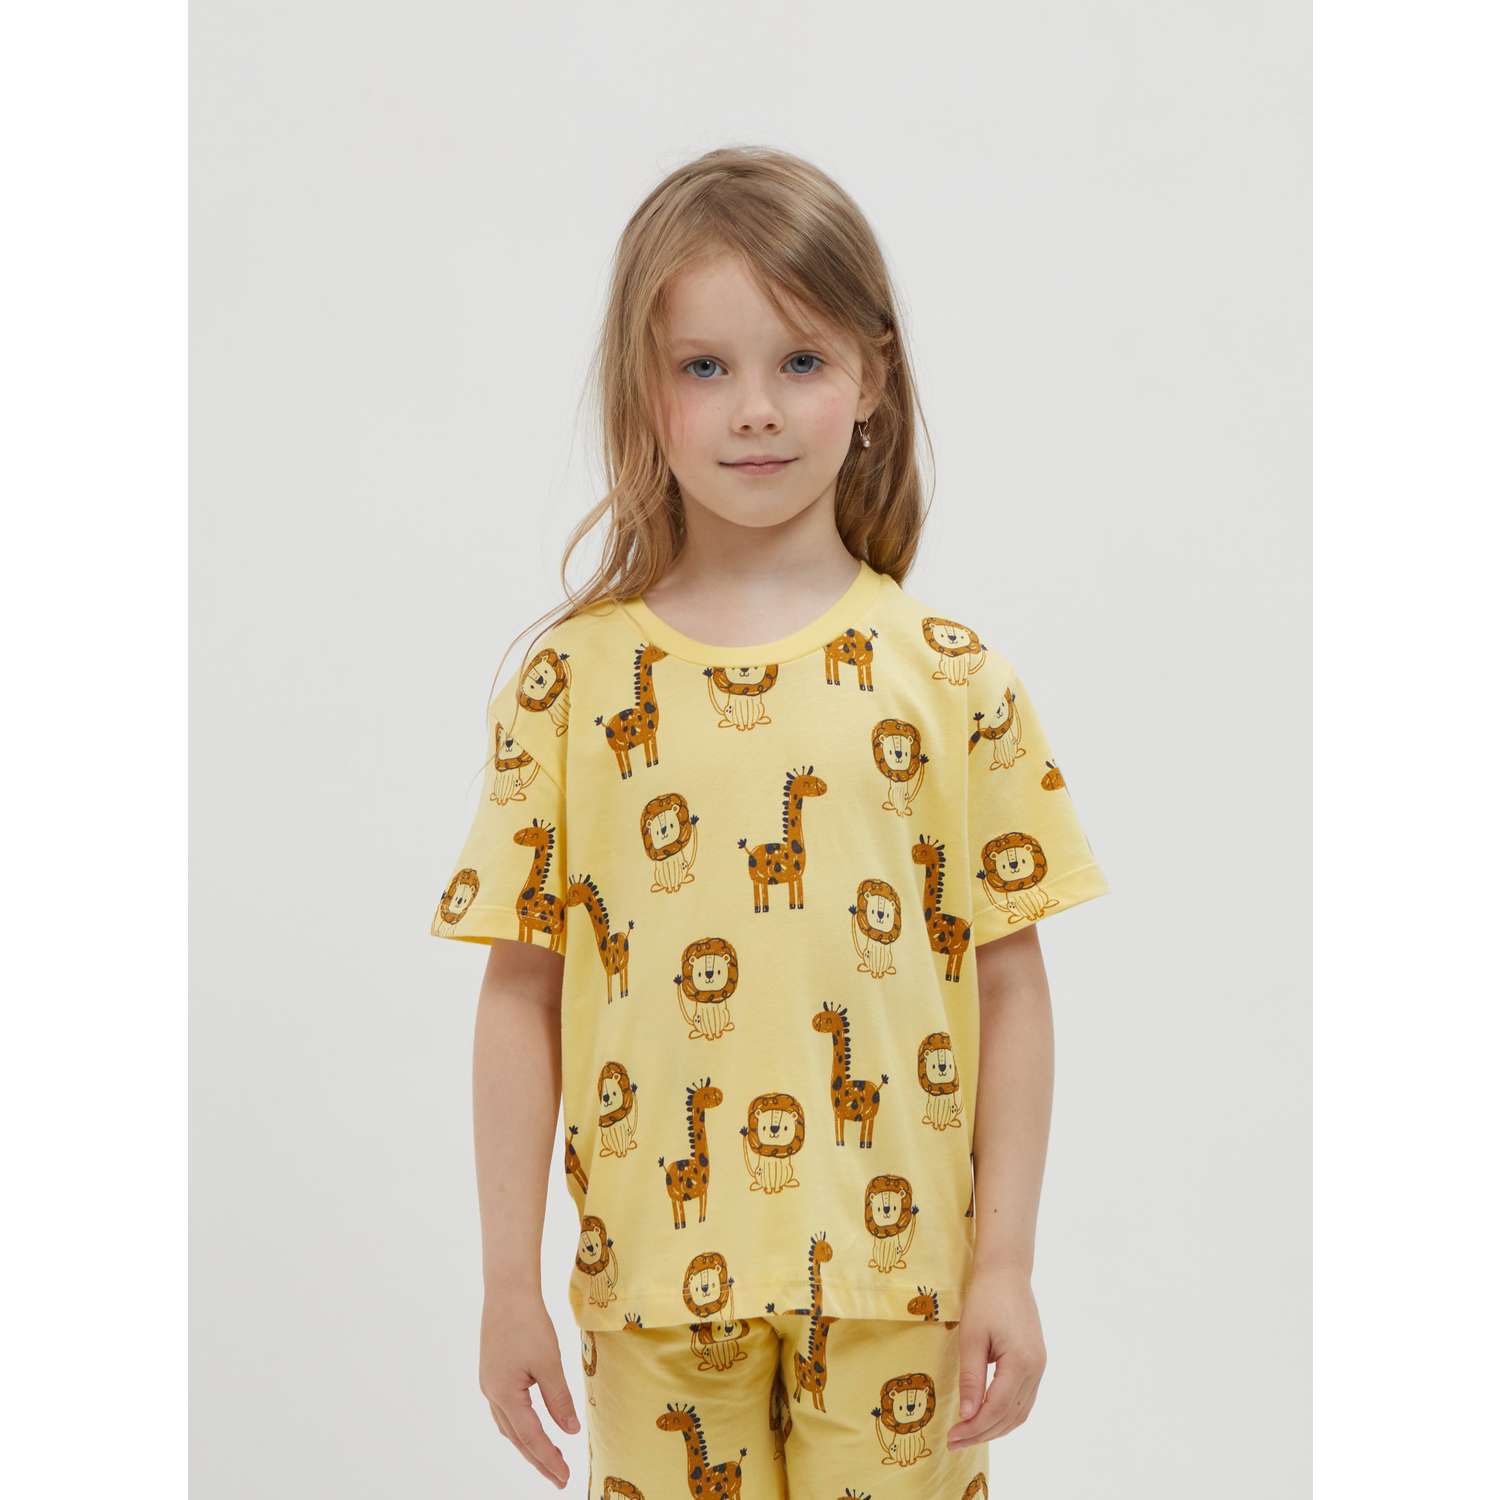 Пижама ISSHOP пижама желтая с шортами - фото 8